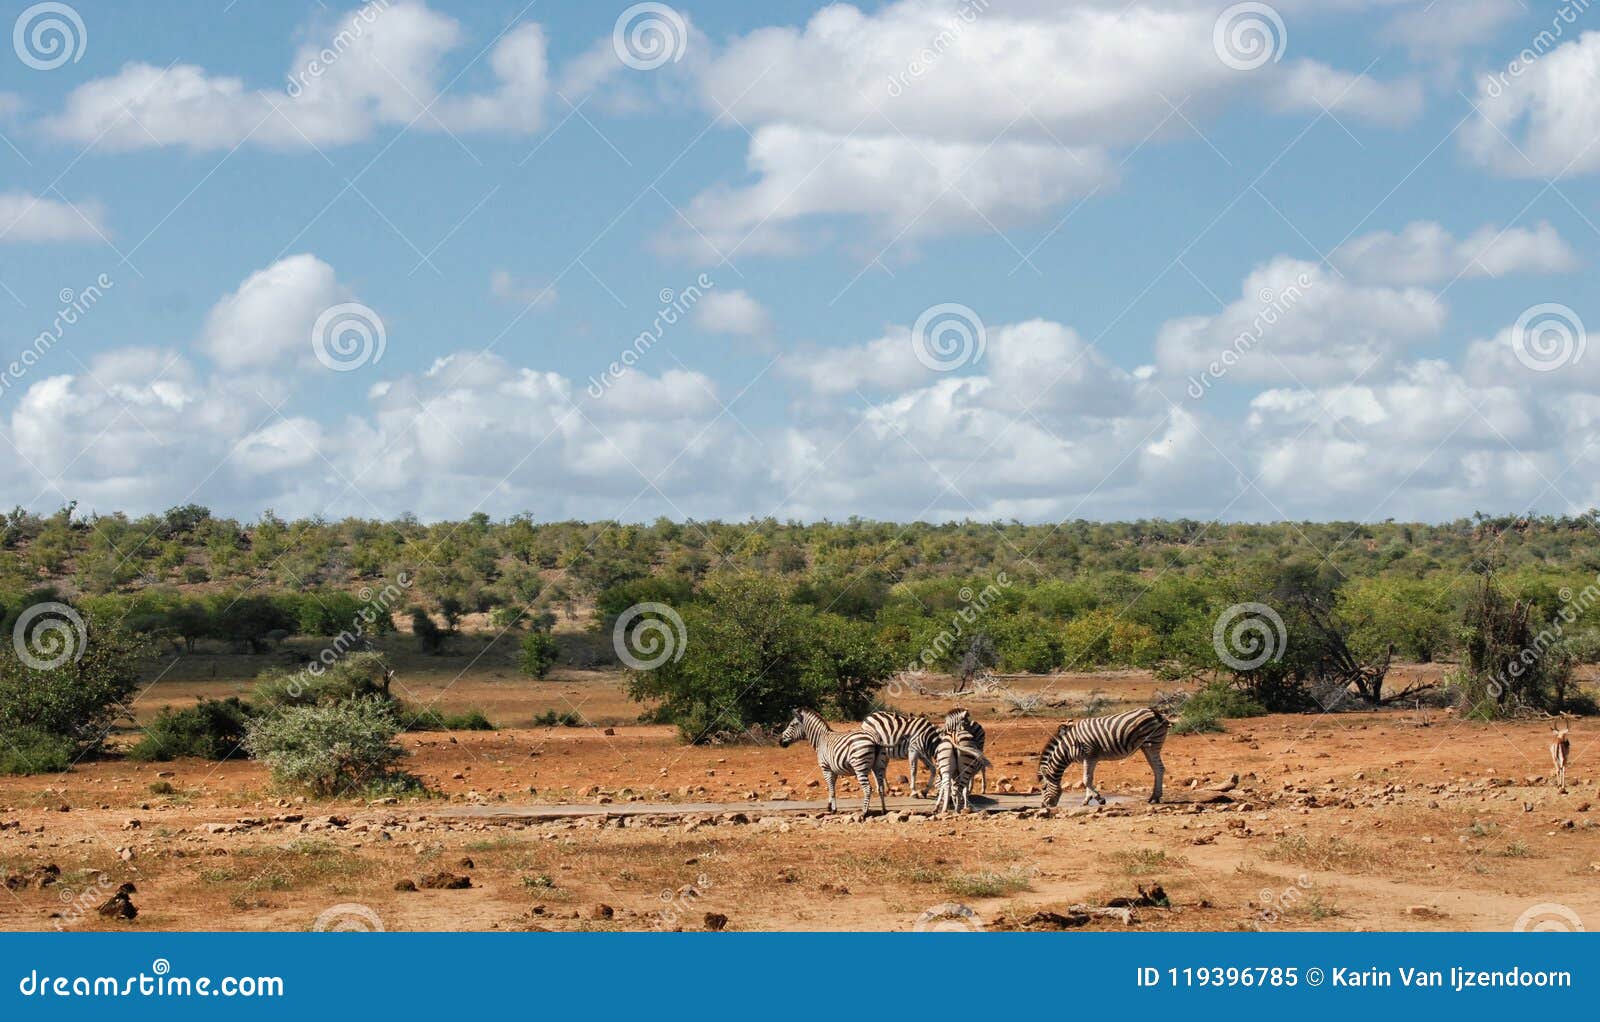 african savannah landscape with plain zebras at waterhole